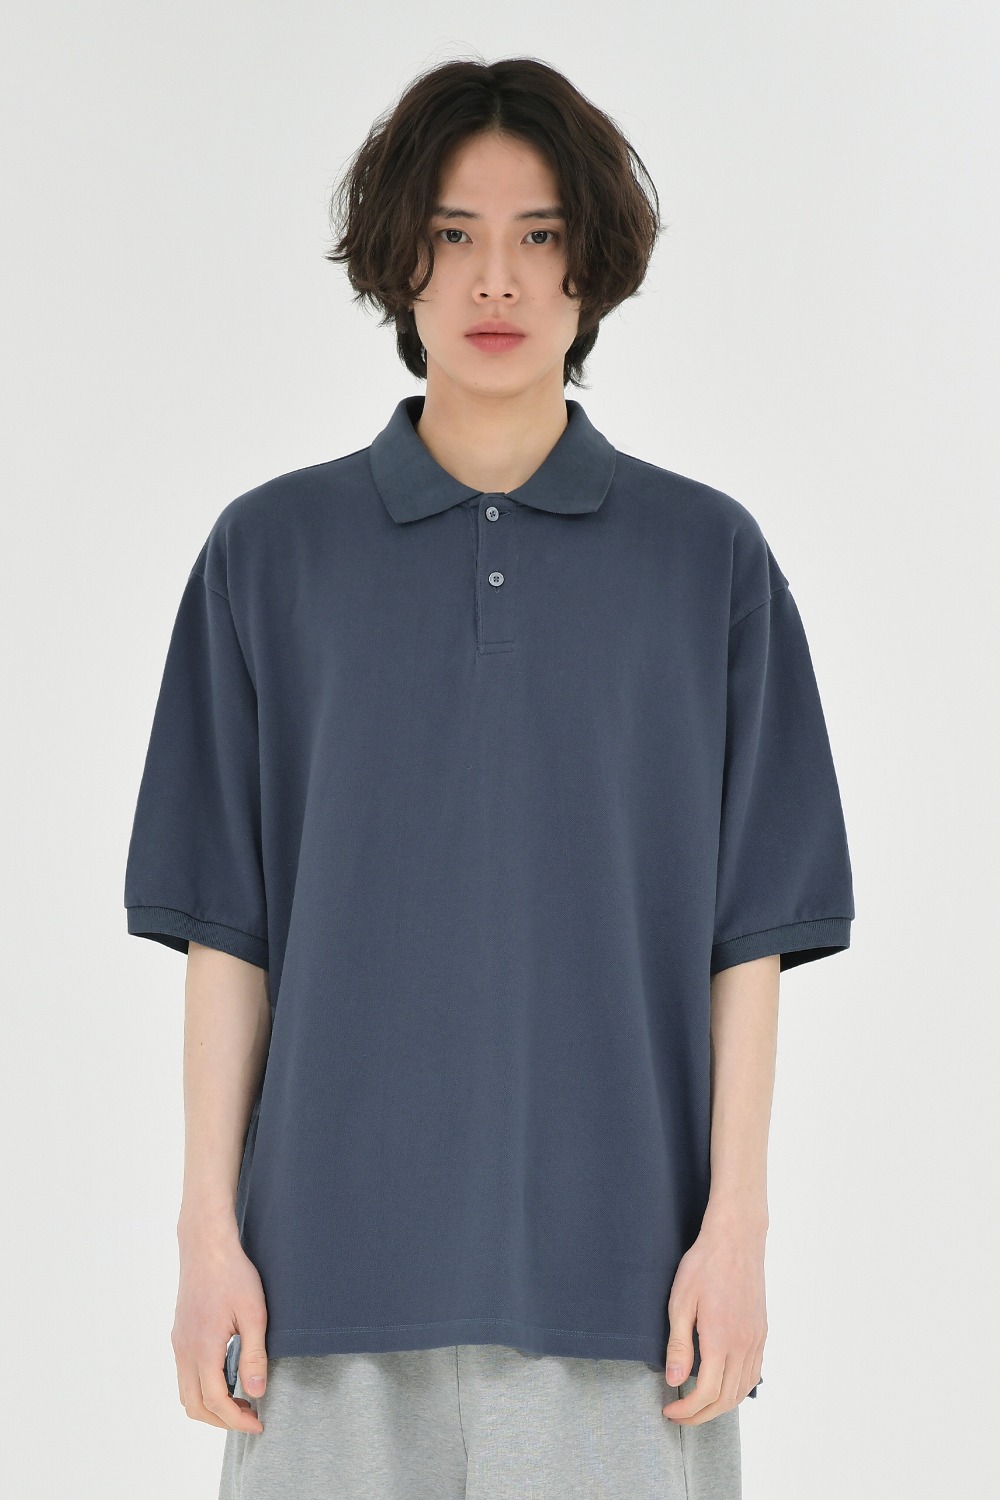 Cotton Pique Shirt-Blue Grey